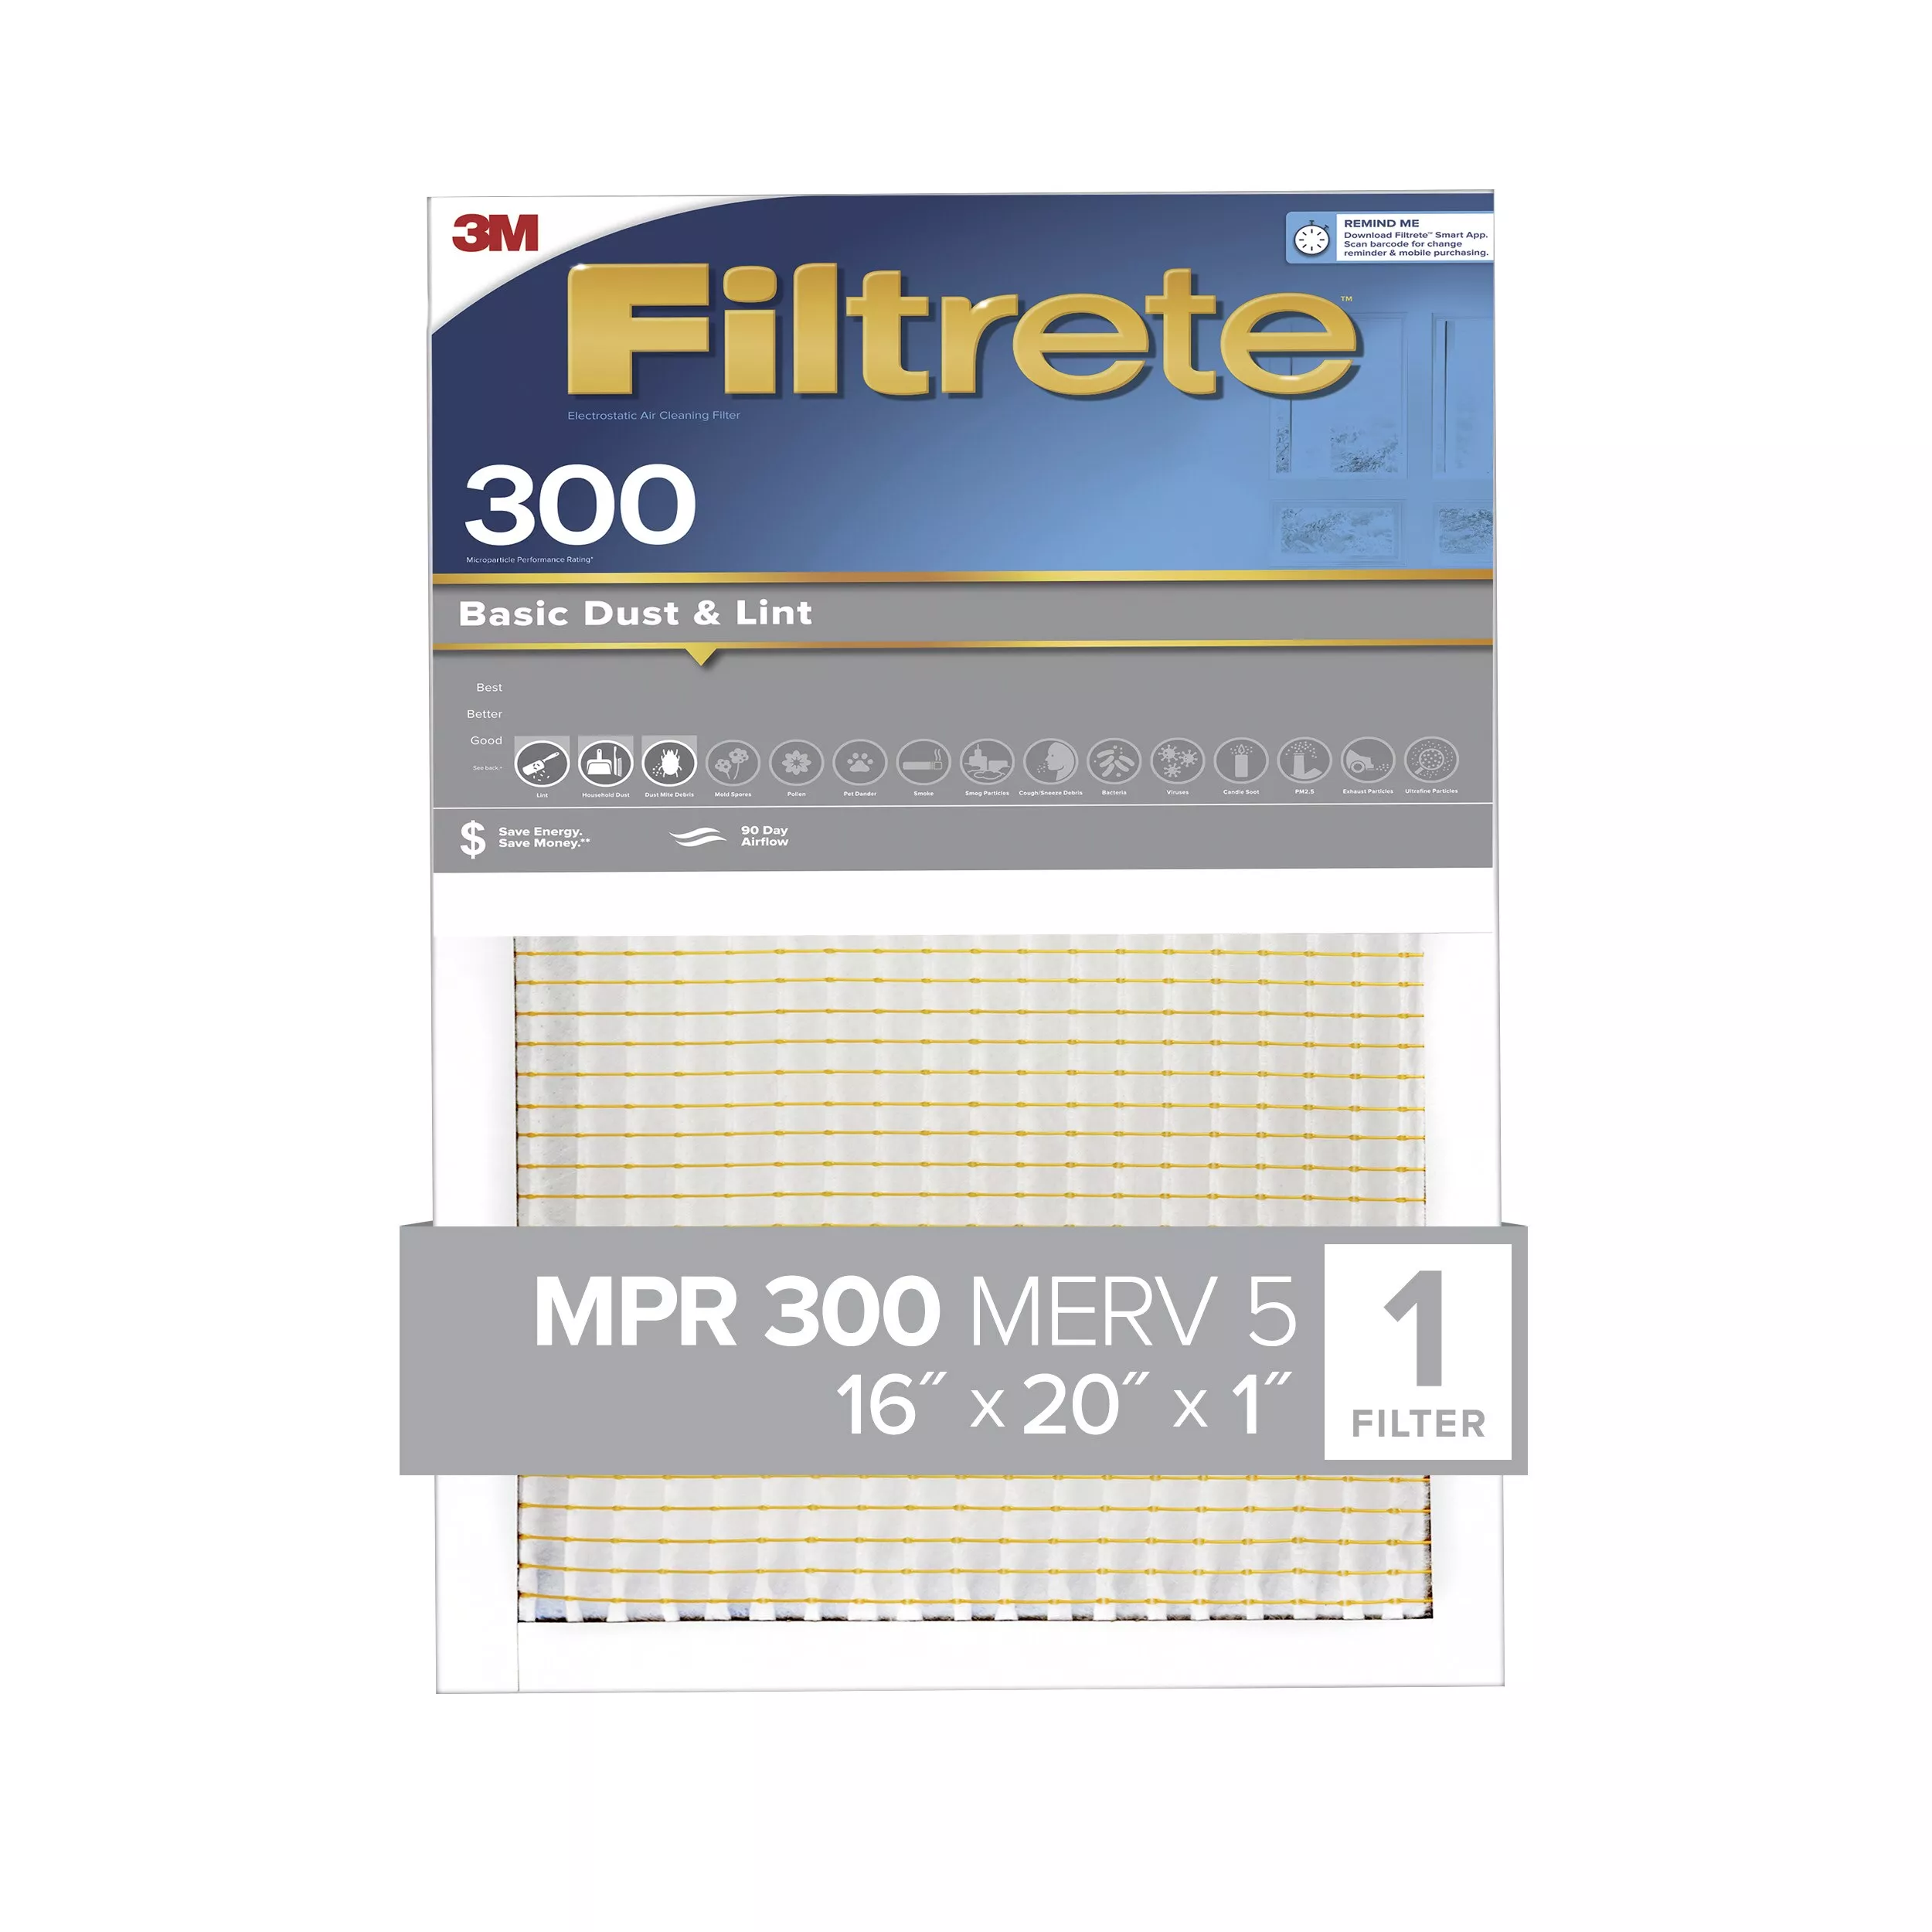 Filtrete™ Basic Dust & Lint Air Filter, 300 MPR, 300-4, 16 in x 20 in x
1 in (40.6 cm x 50.8 cm x 2.5 cm)